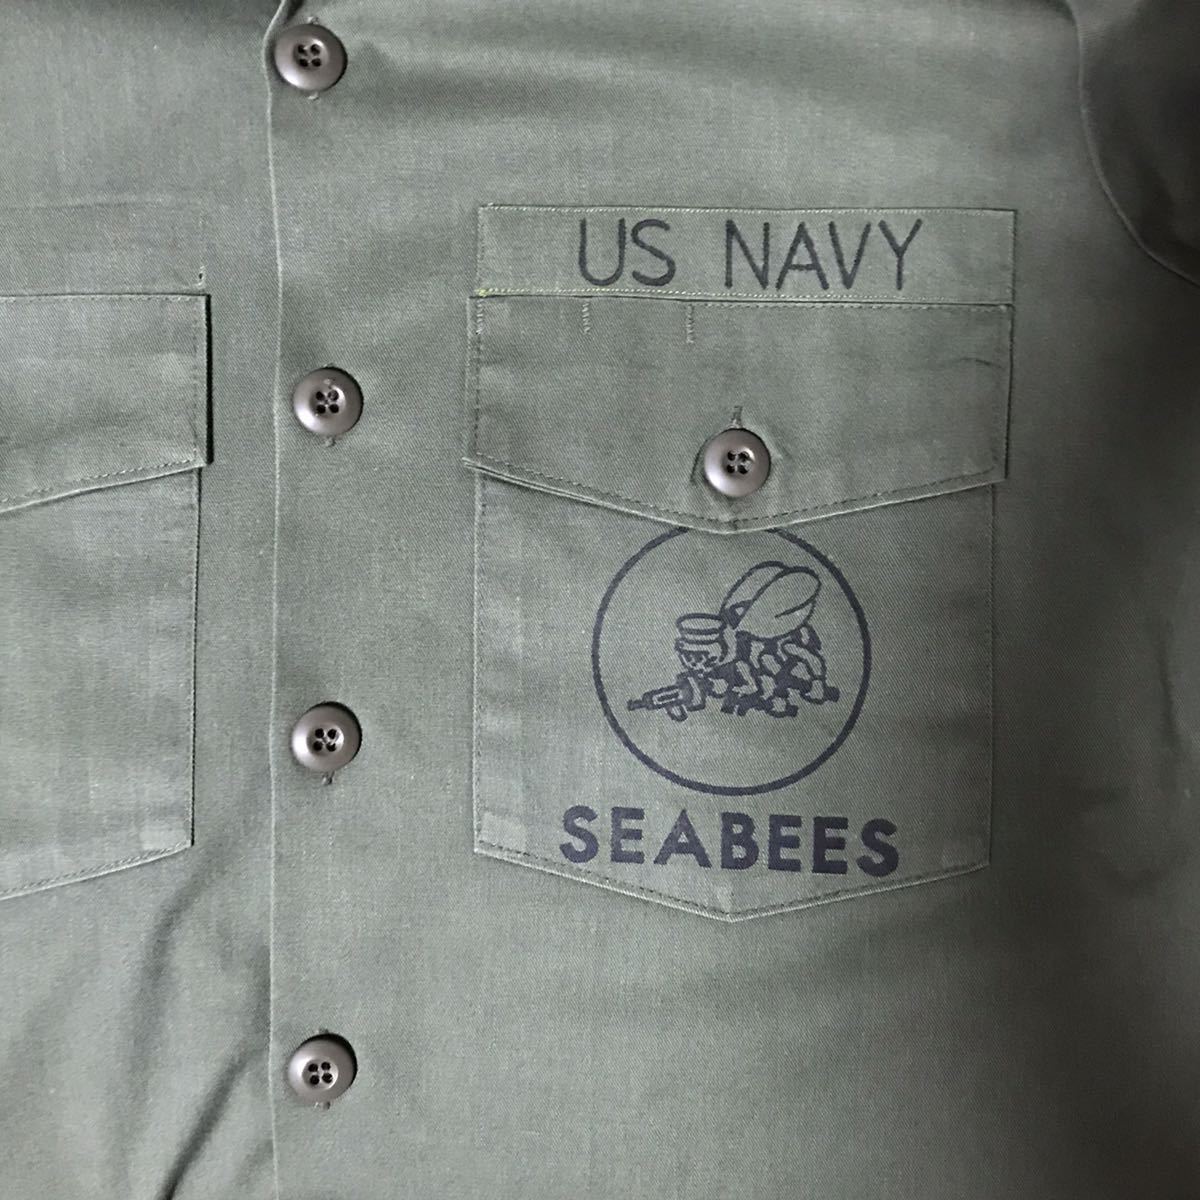 USED MILITARY '84 US NAVY SEABEES SHIRT 中古 84年製 米軍実物 海軍シービーズユーティリティシャツ M サイズくらい ミリタリー 送料無料